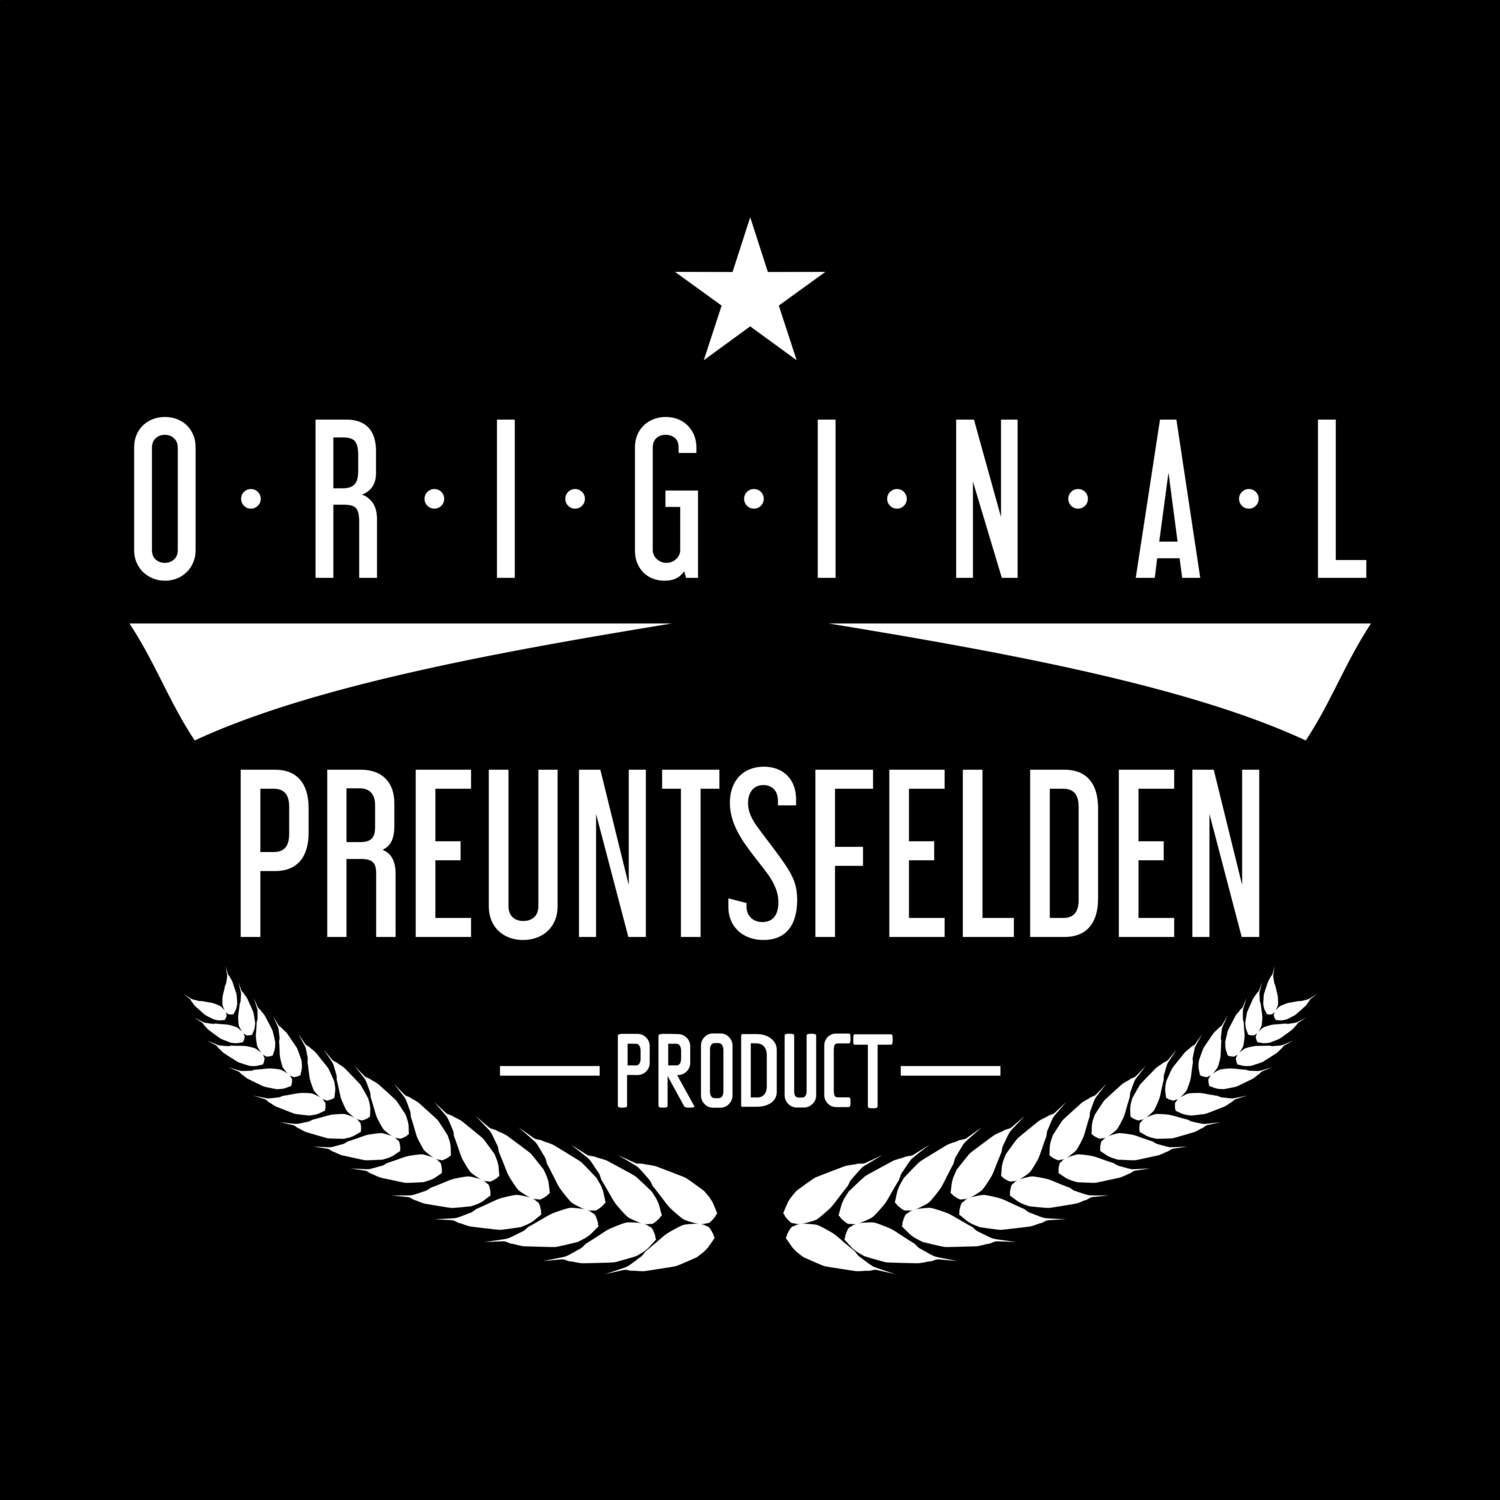 Preuntsfelden T-Shirt »Original Product«